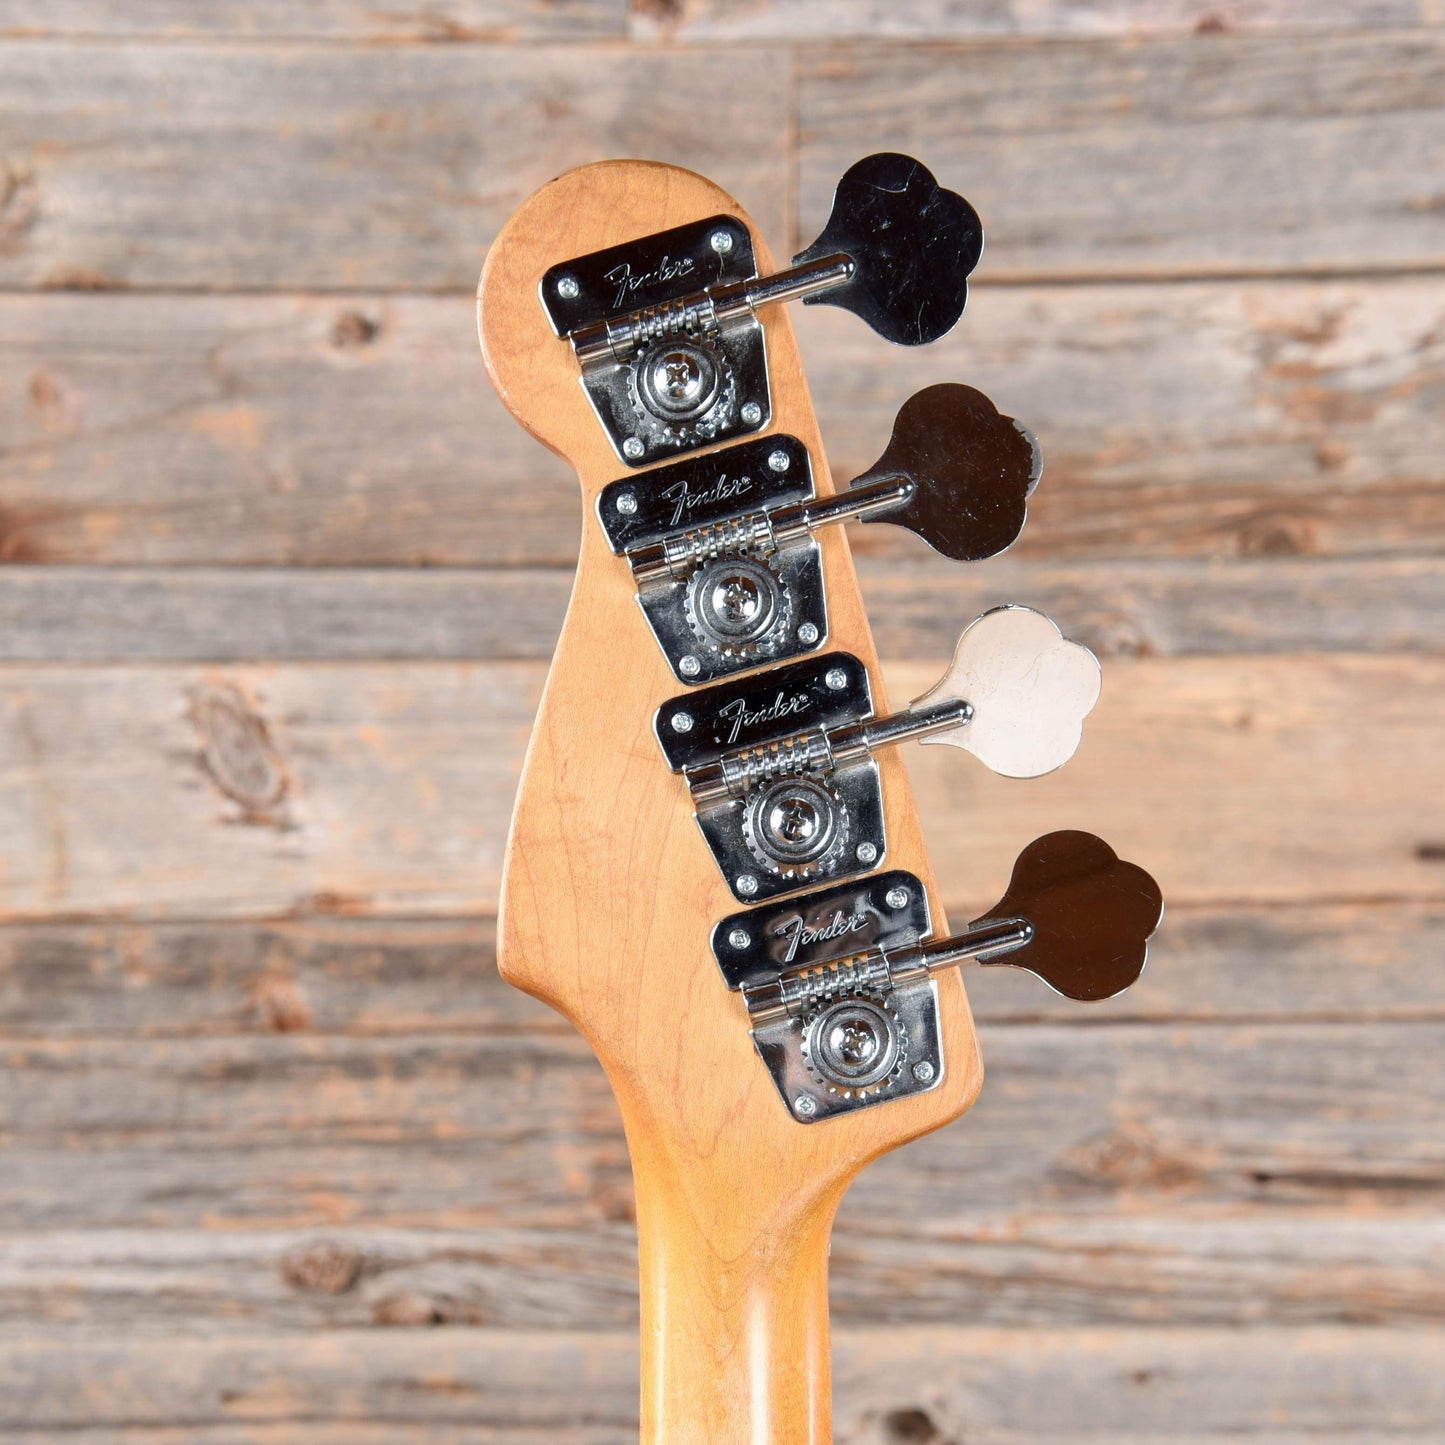 Fender Early '70s Precision Bass Black Refin Bass Guitars / 4-String